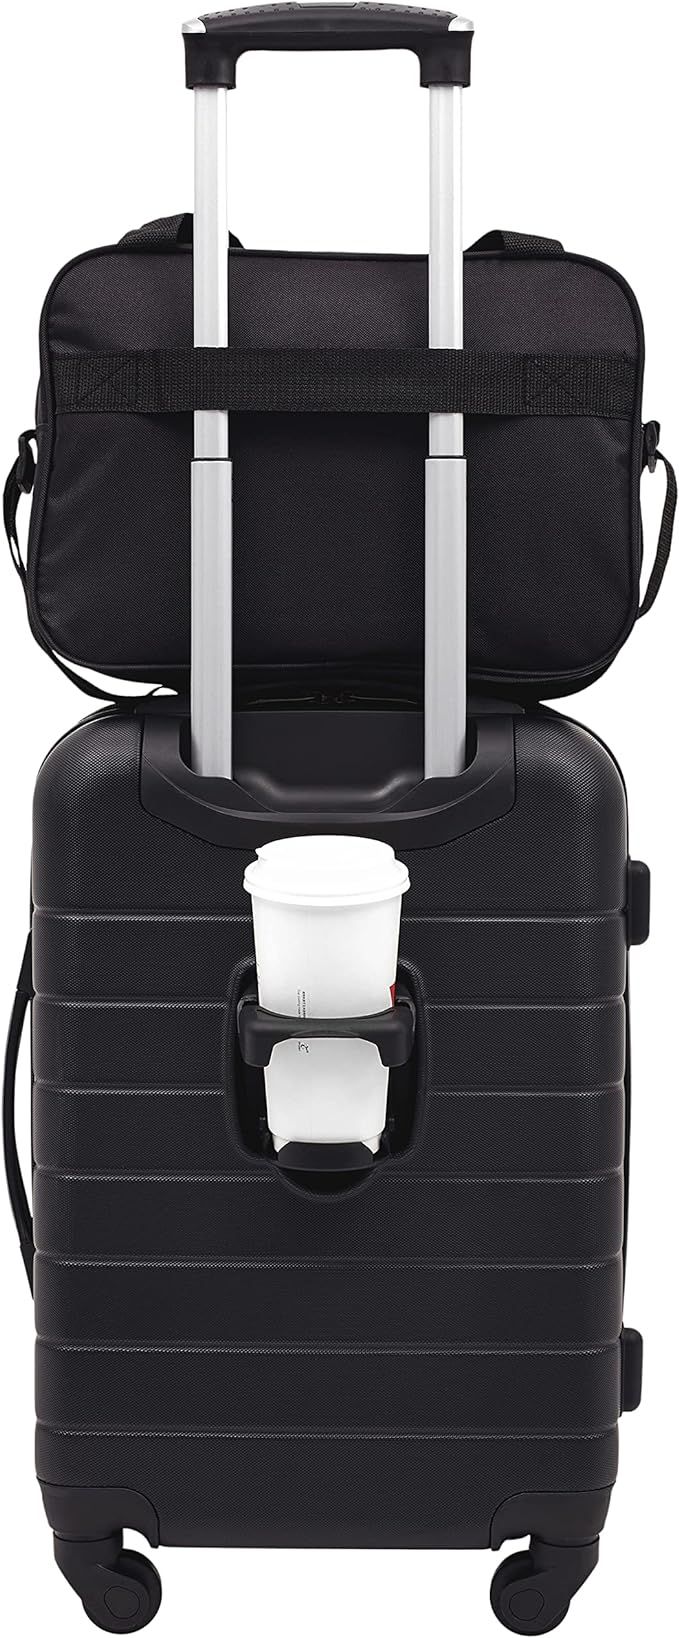 Wrangler Smart Luggage Set with Cup Holder, USB Port and Phone Holder, Black, 2 Piece Set | Amazon (US)